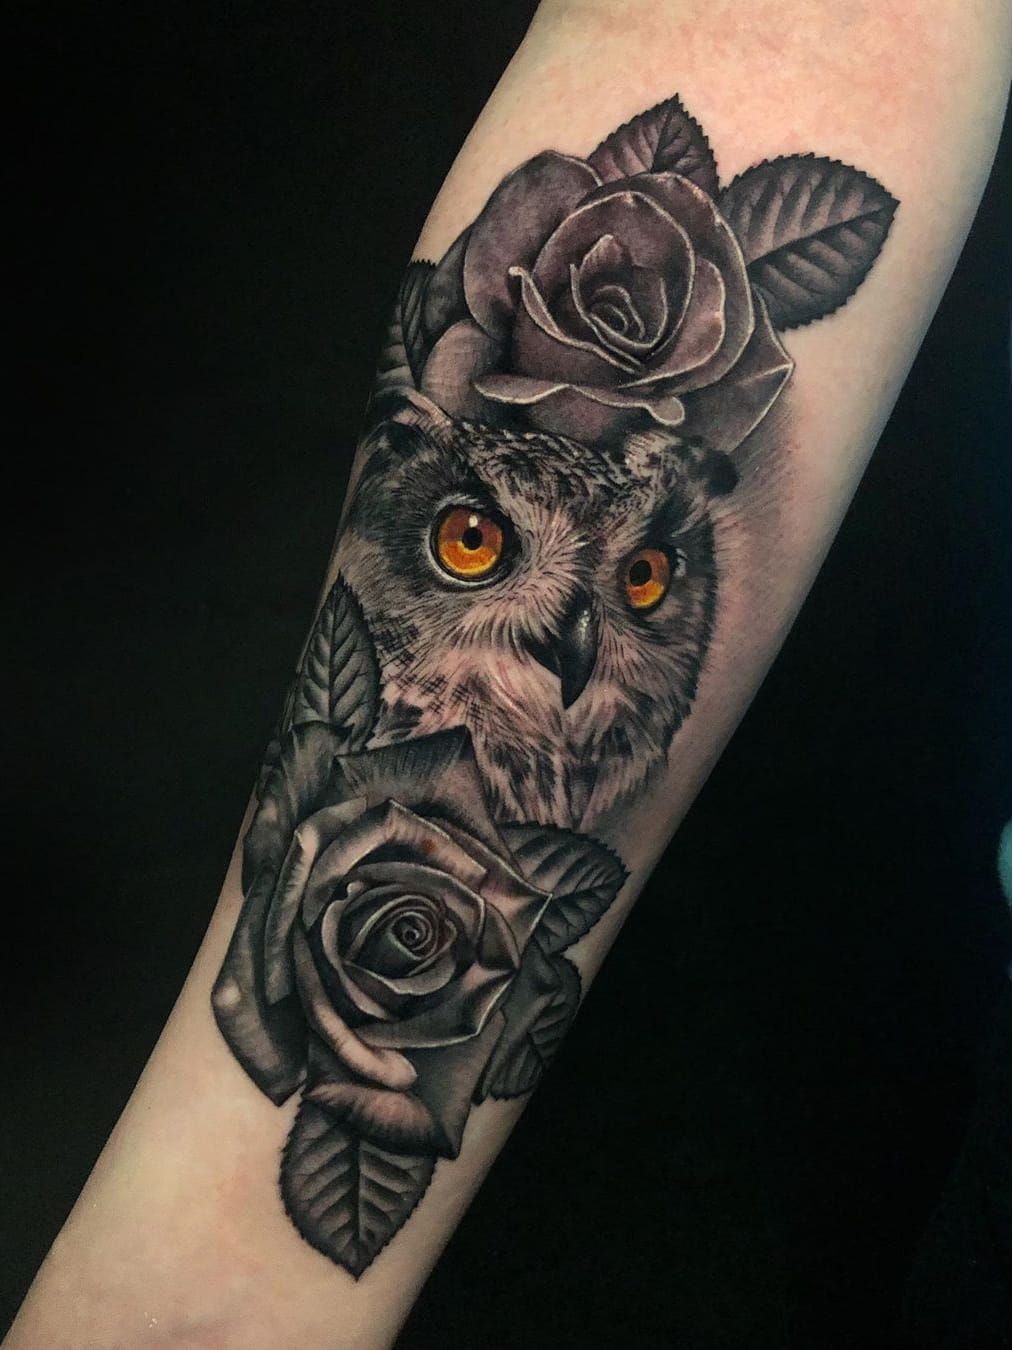 12 Best Owl and Rose Tattoo Designs  PetPress  Incredible tattoos  Picture tattoos Rose tattoos